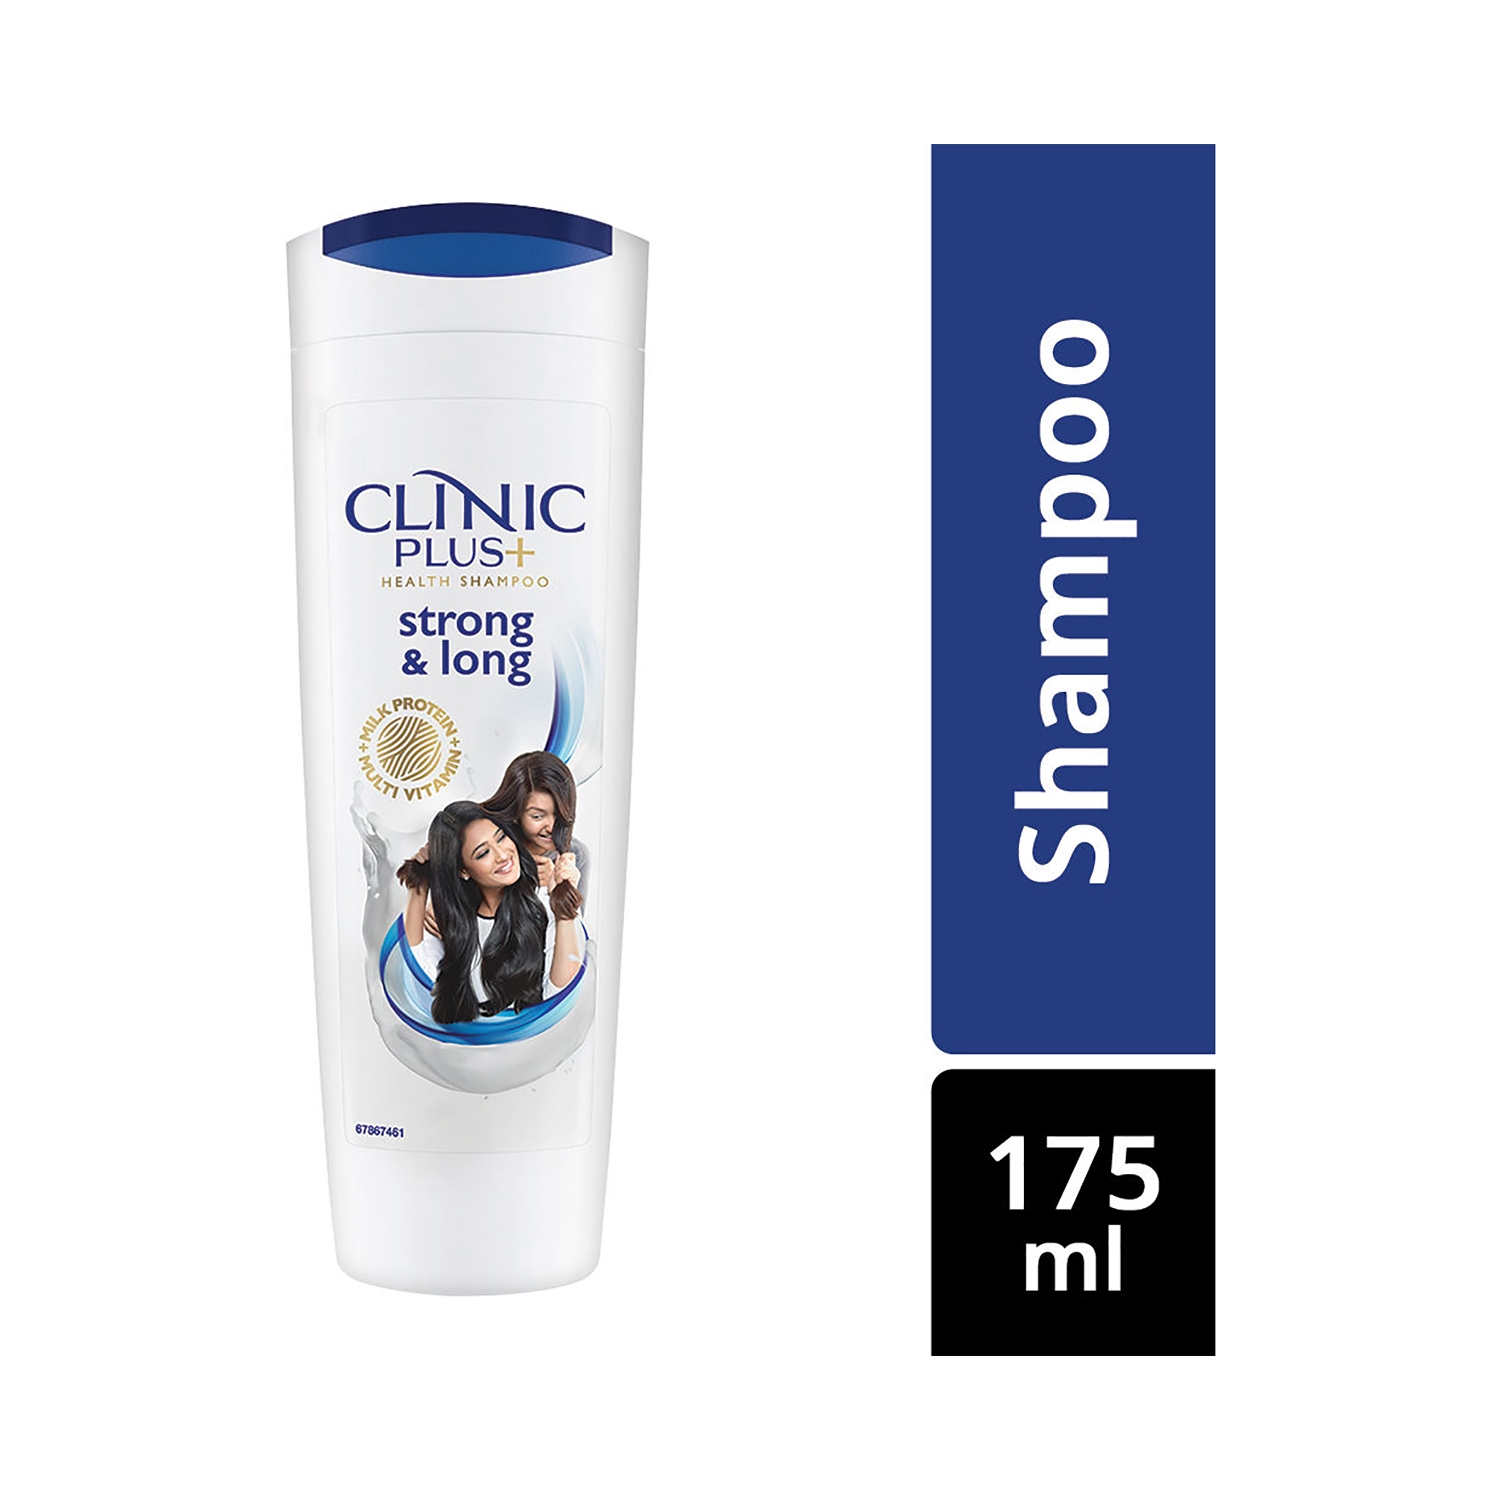 Clinic Plus | Clinic Plus Strong & Long Health Shampoo (175ml)